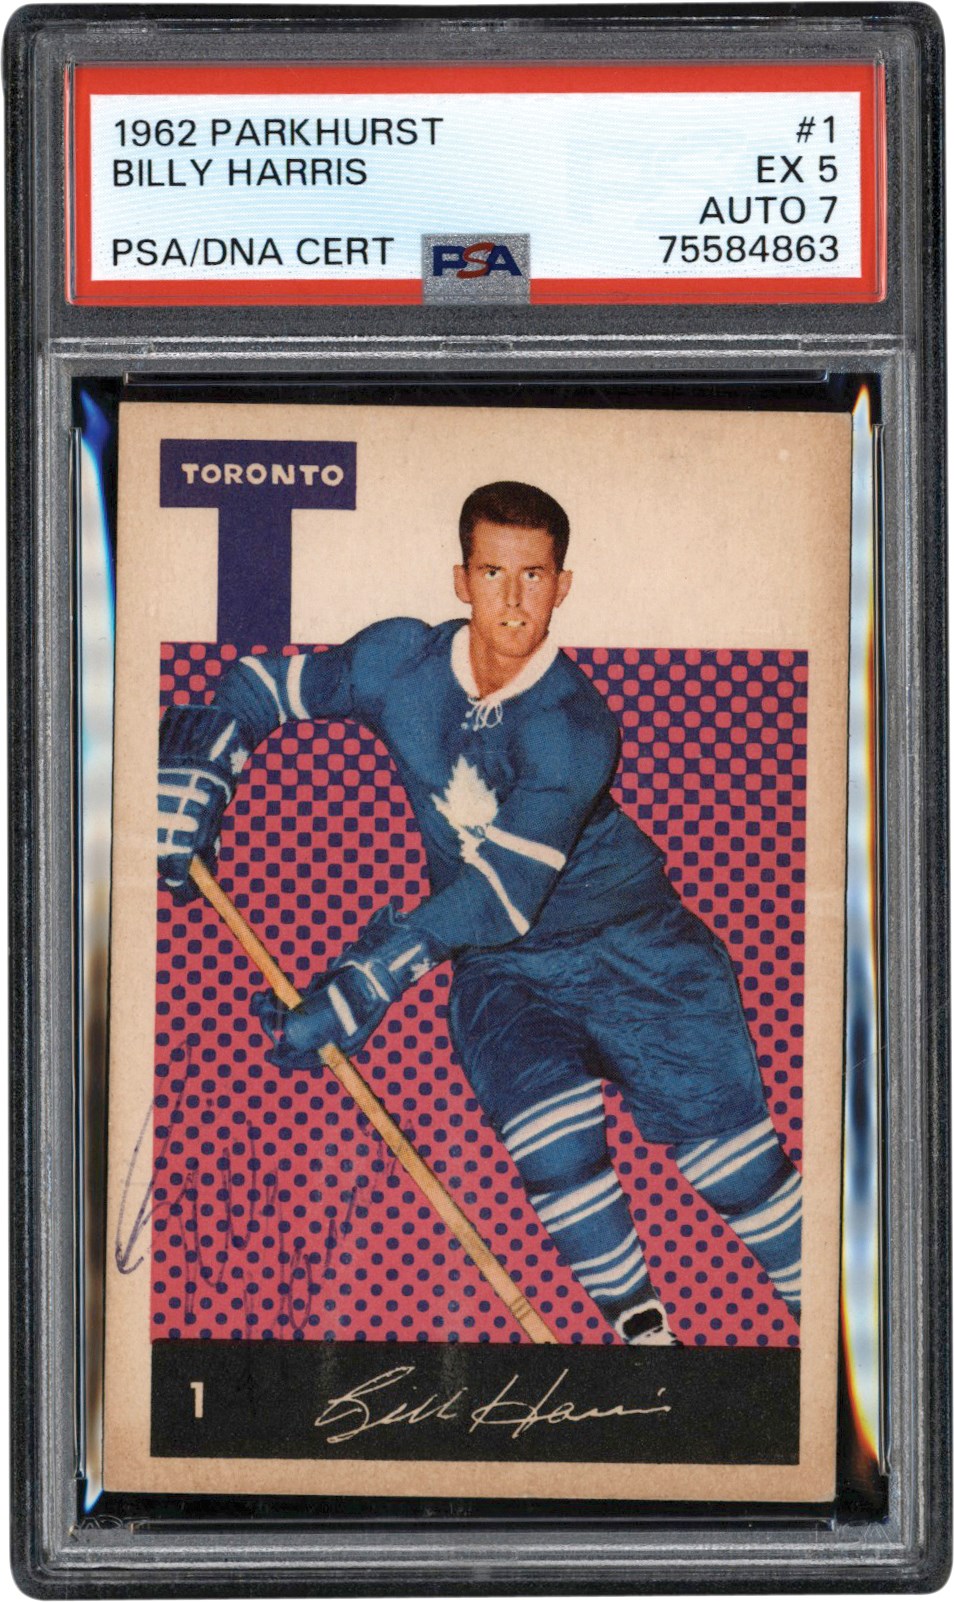 Hockey Cards - 1962 Parkhurst Hockey #1 Billy Harris Signed Card PSA EX 5 Auto 7 (Only Known Example)